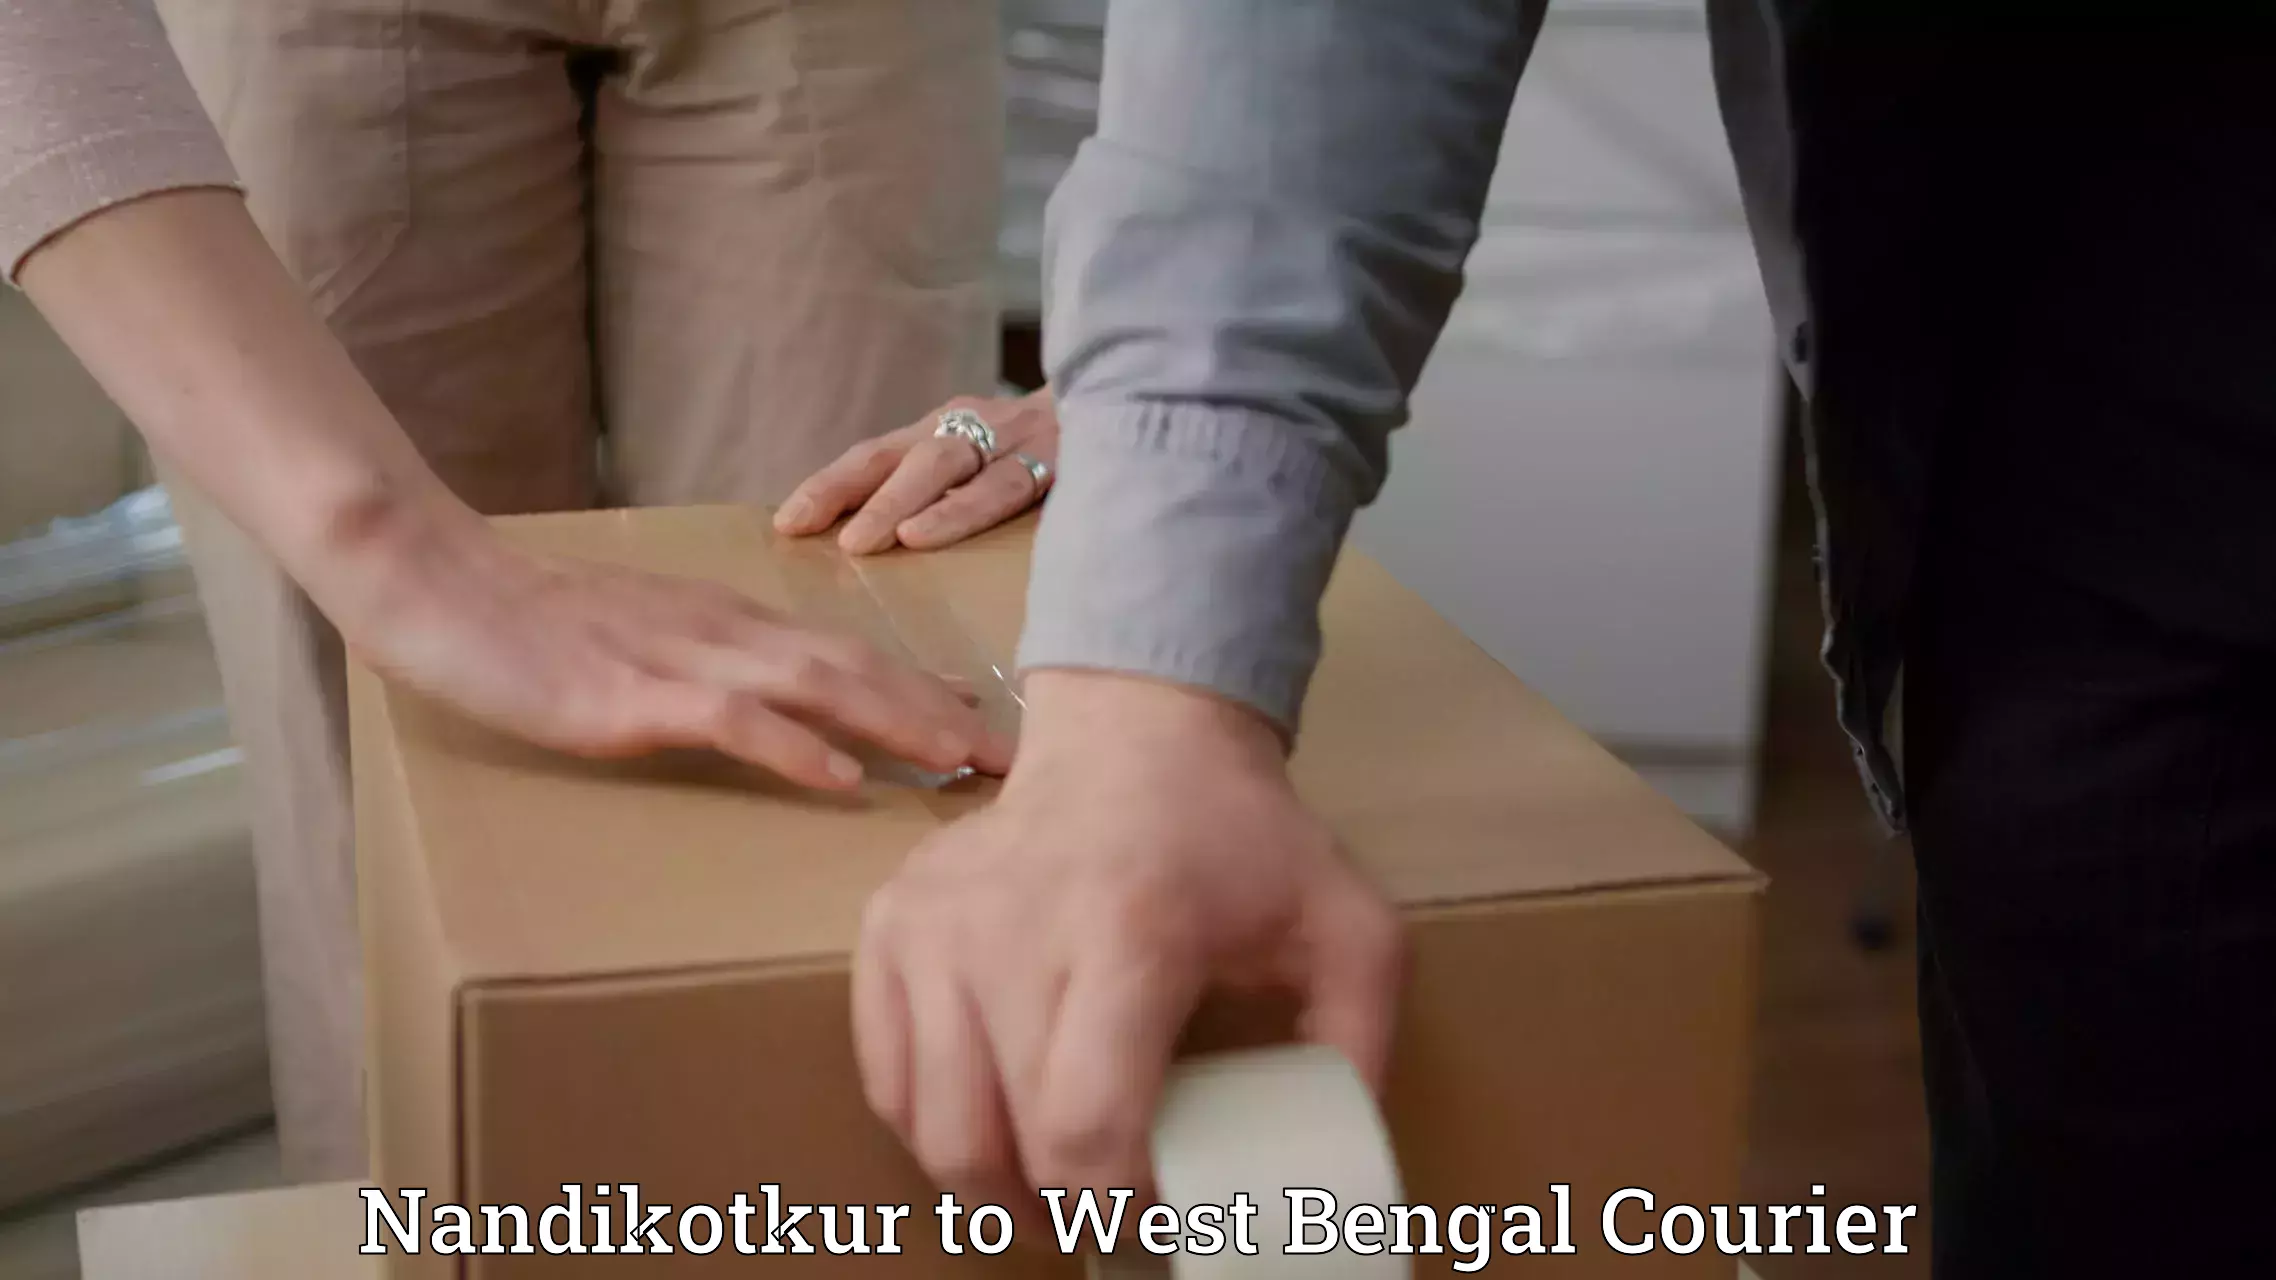 Express delivery network Nandikotkur to West Bengal